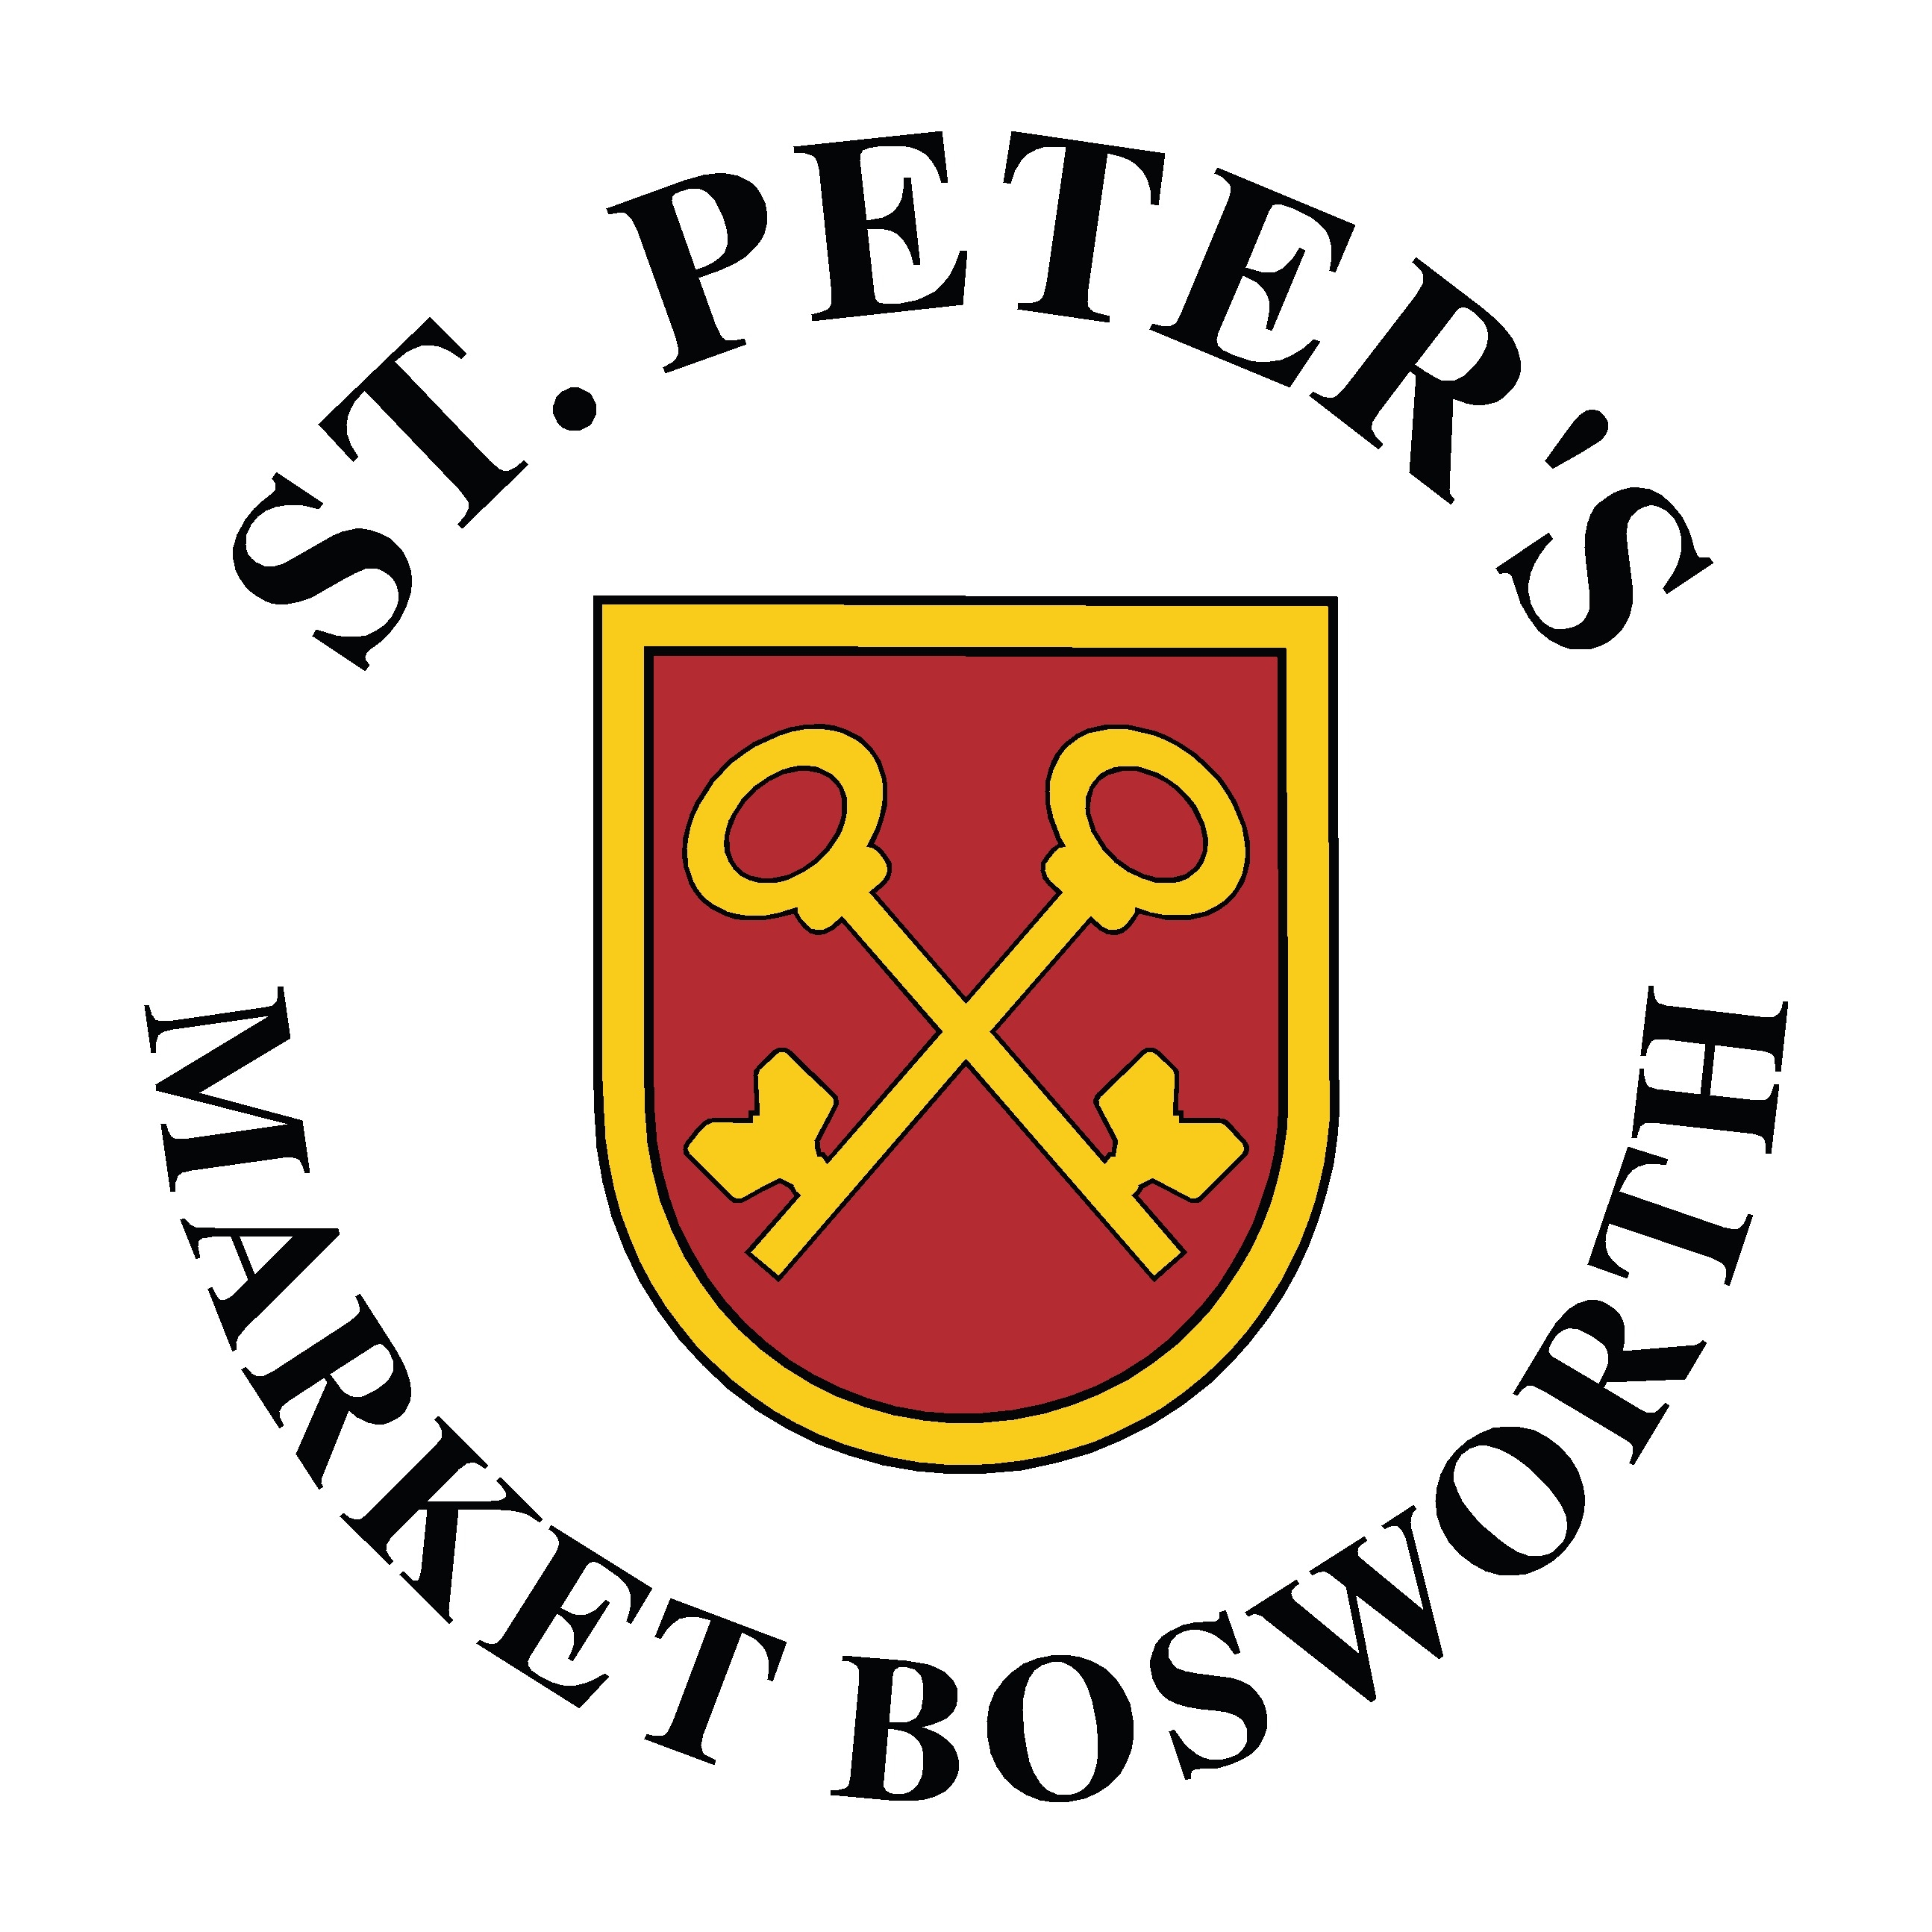 st peters badge logo in colour.jpg